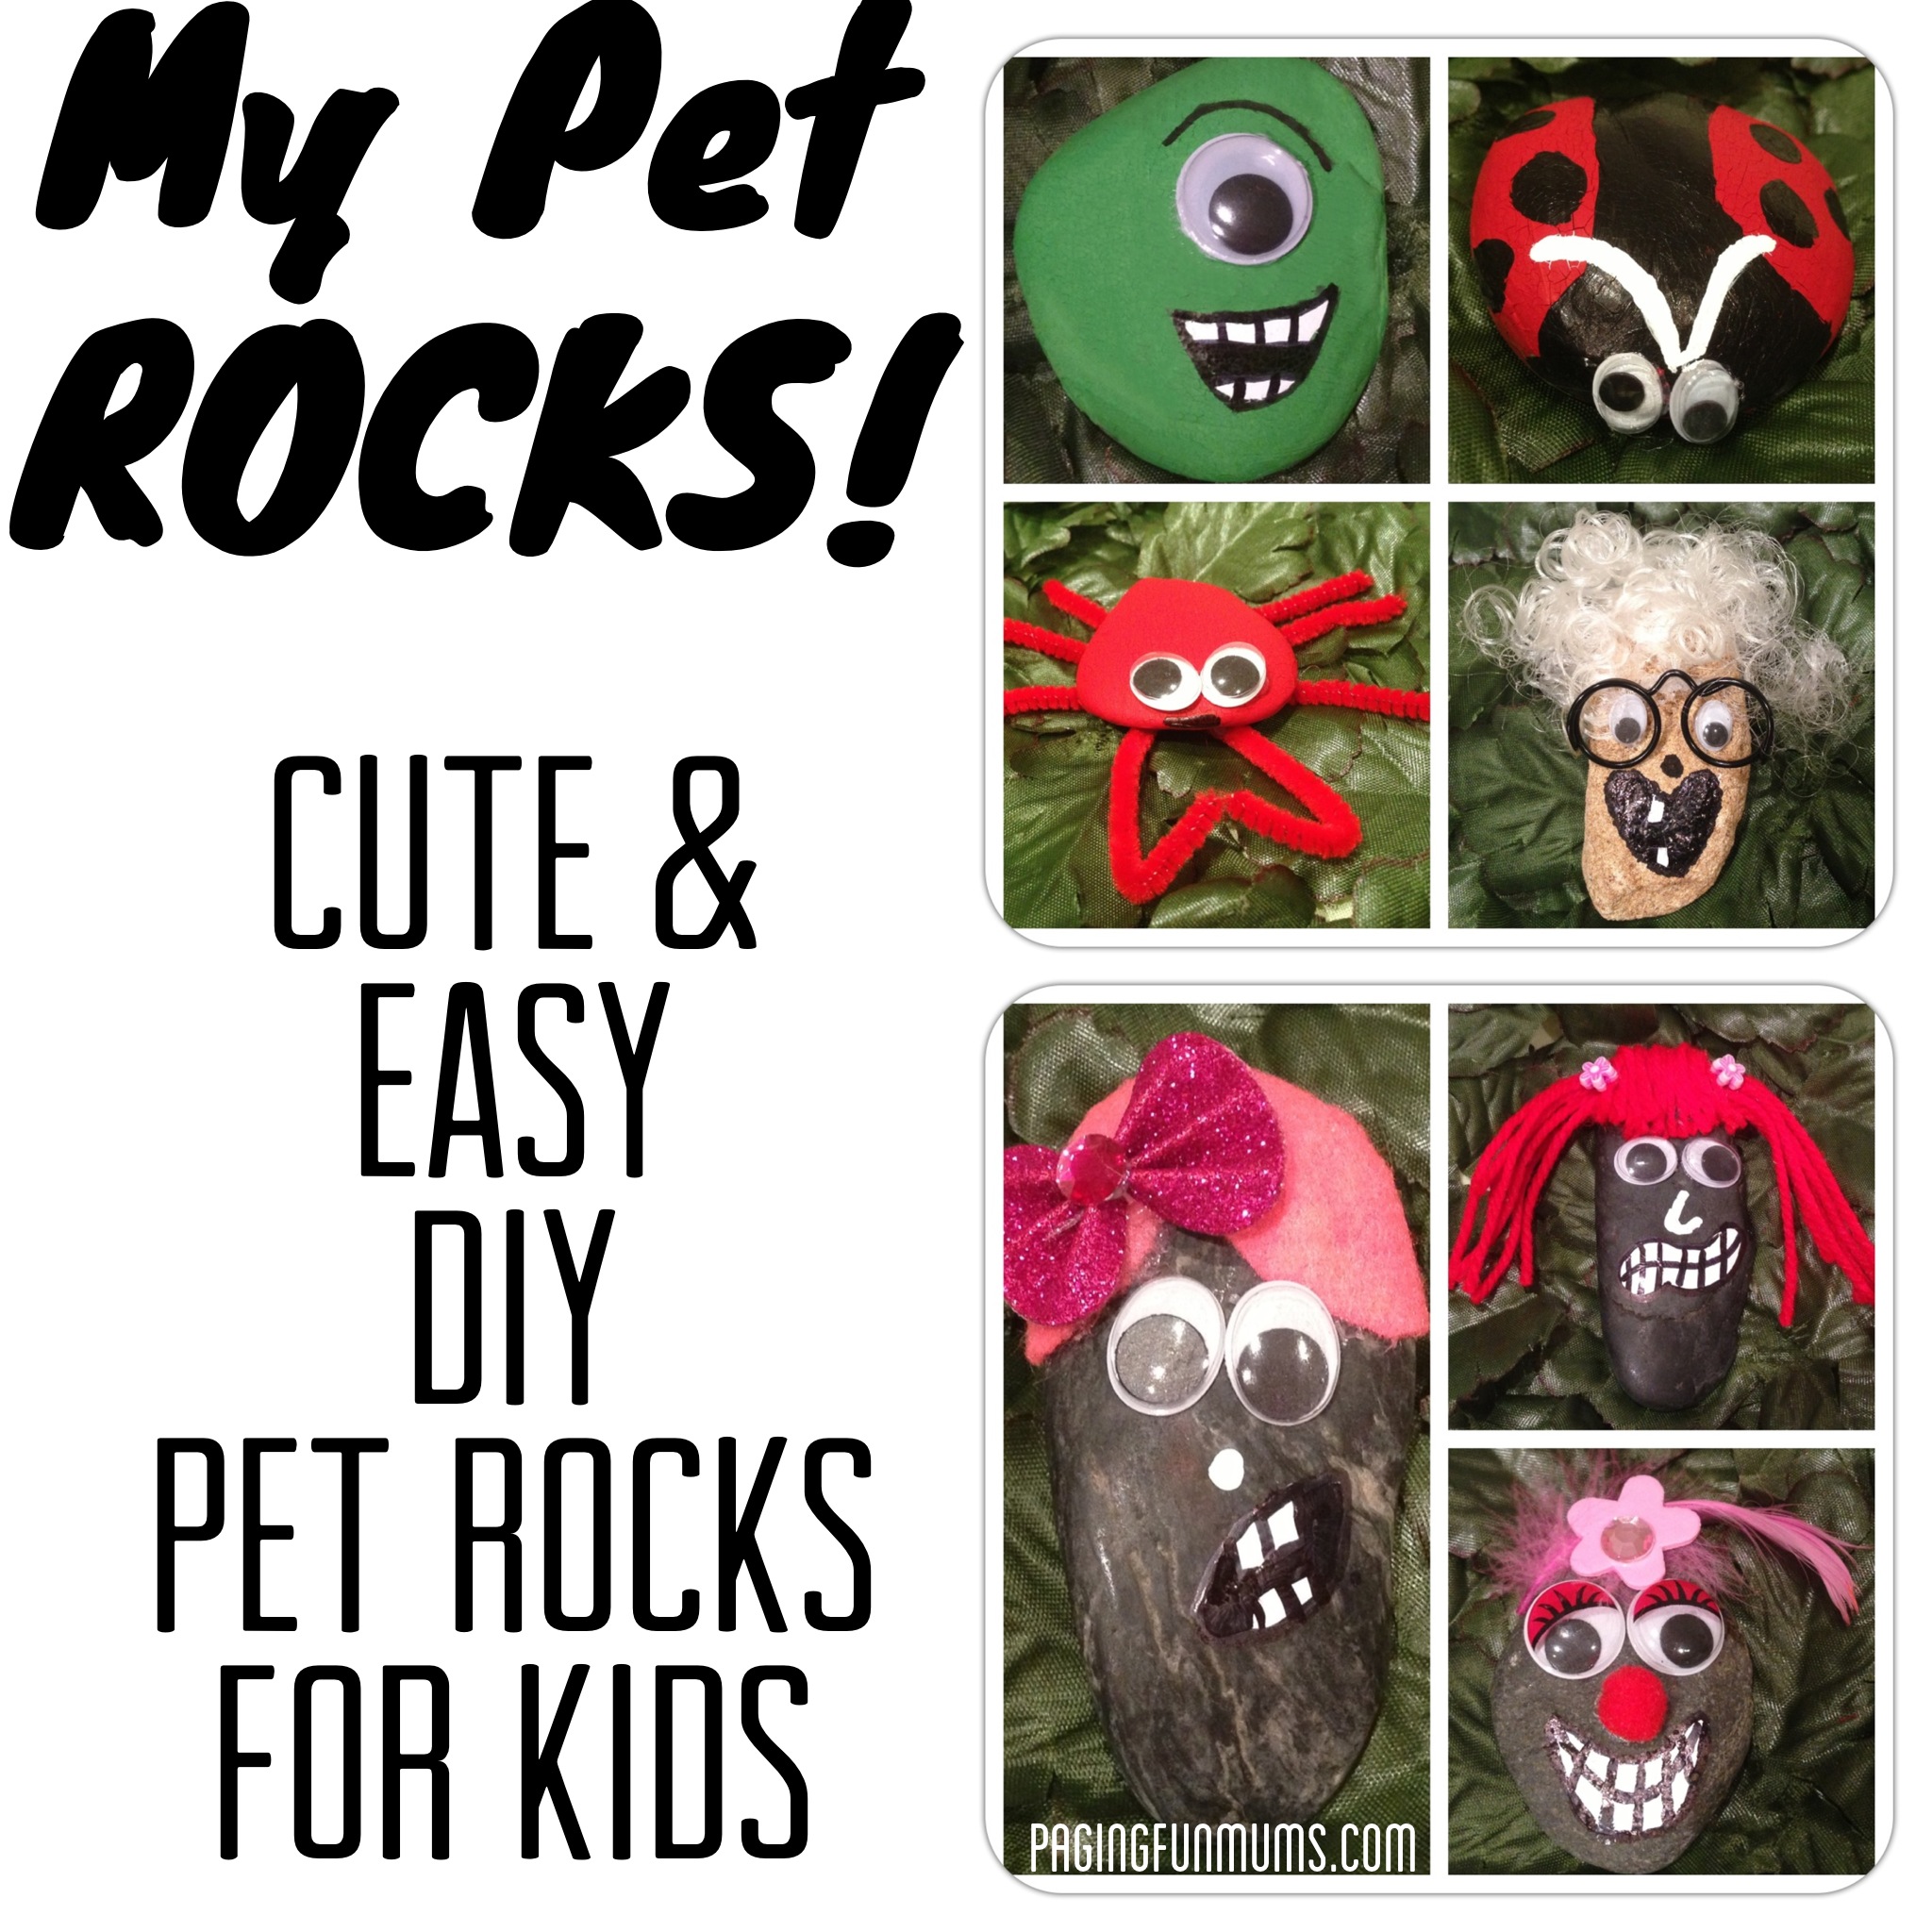 My Pet Rocks! Cute & easy DIY Pet Rocks For Kids